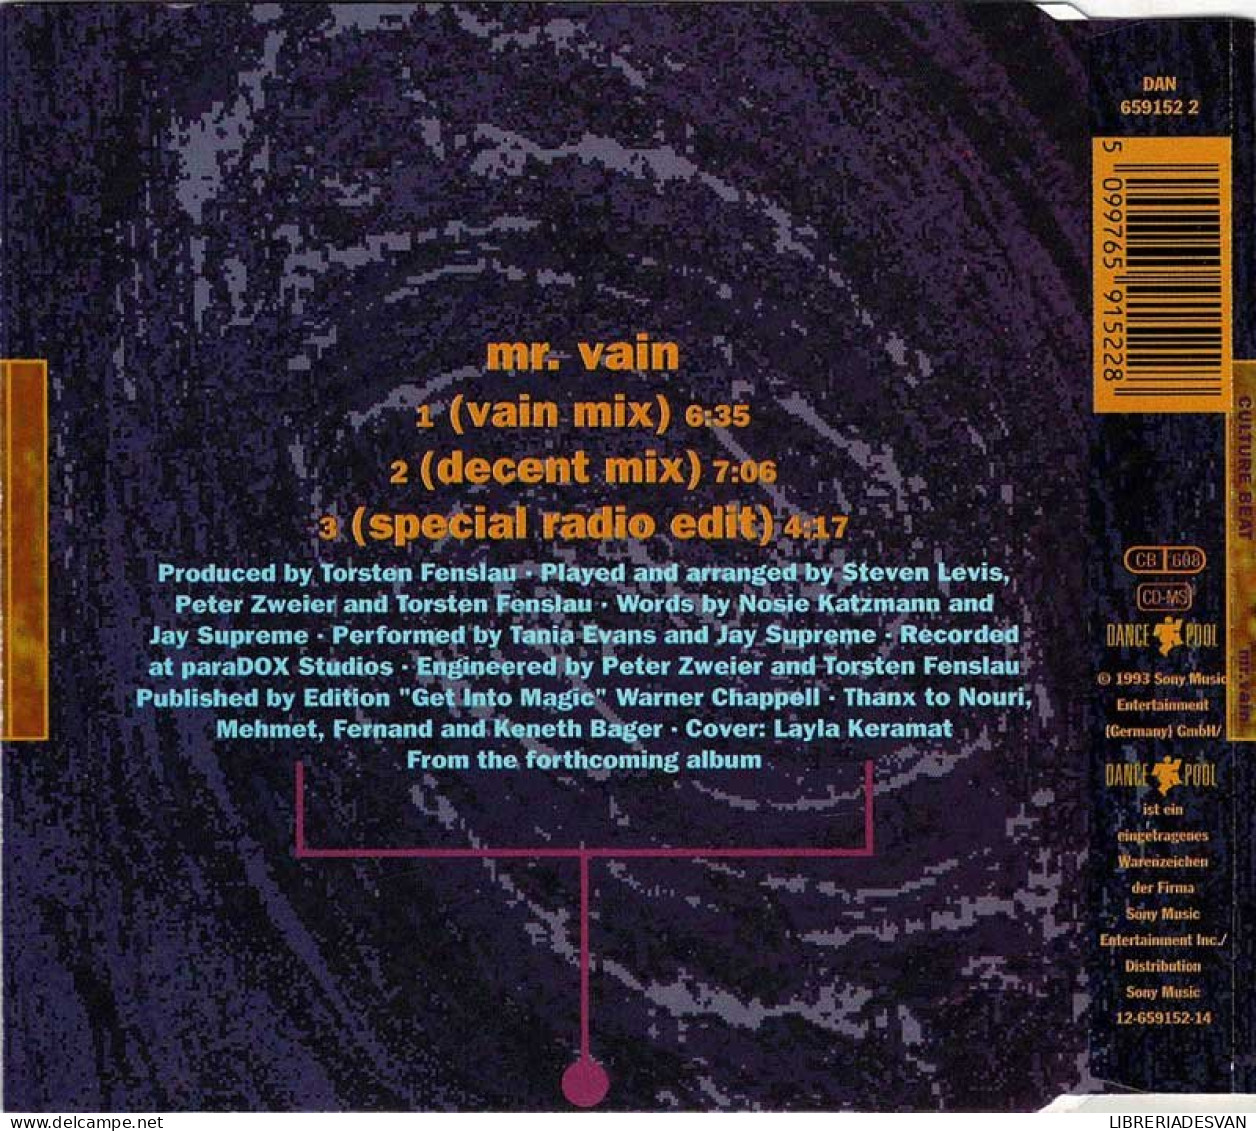 Culture Beat - Mr. Vain. CD Maxi Single - Dance, Techno & House